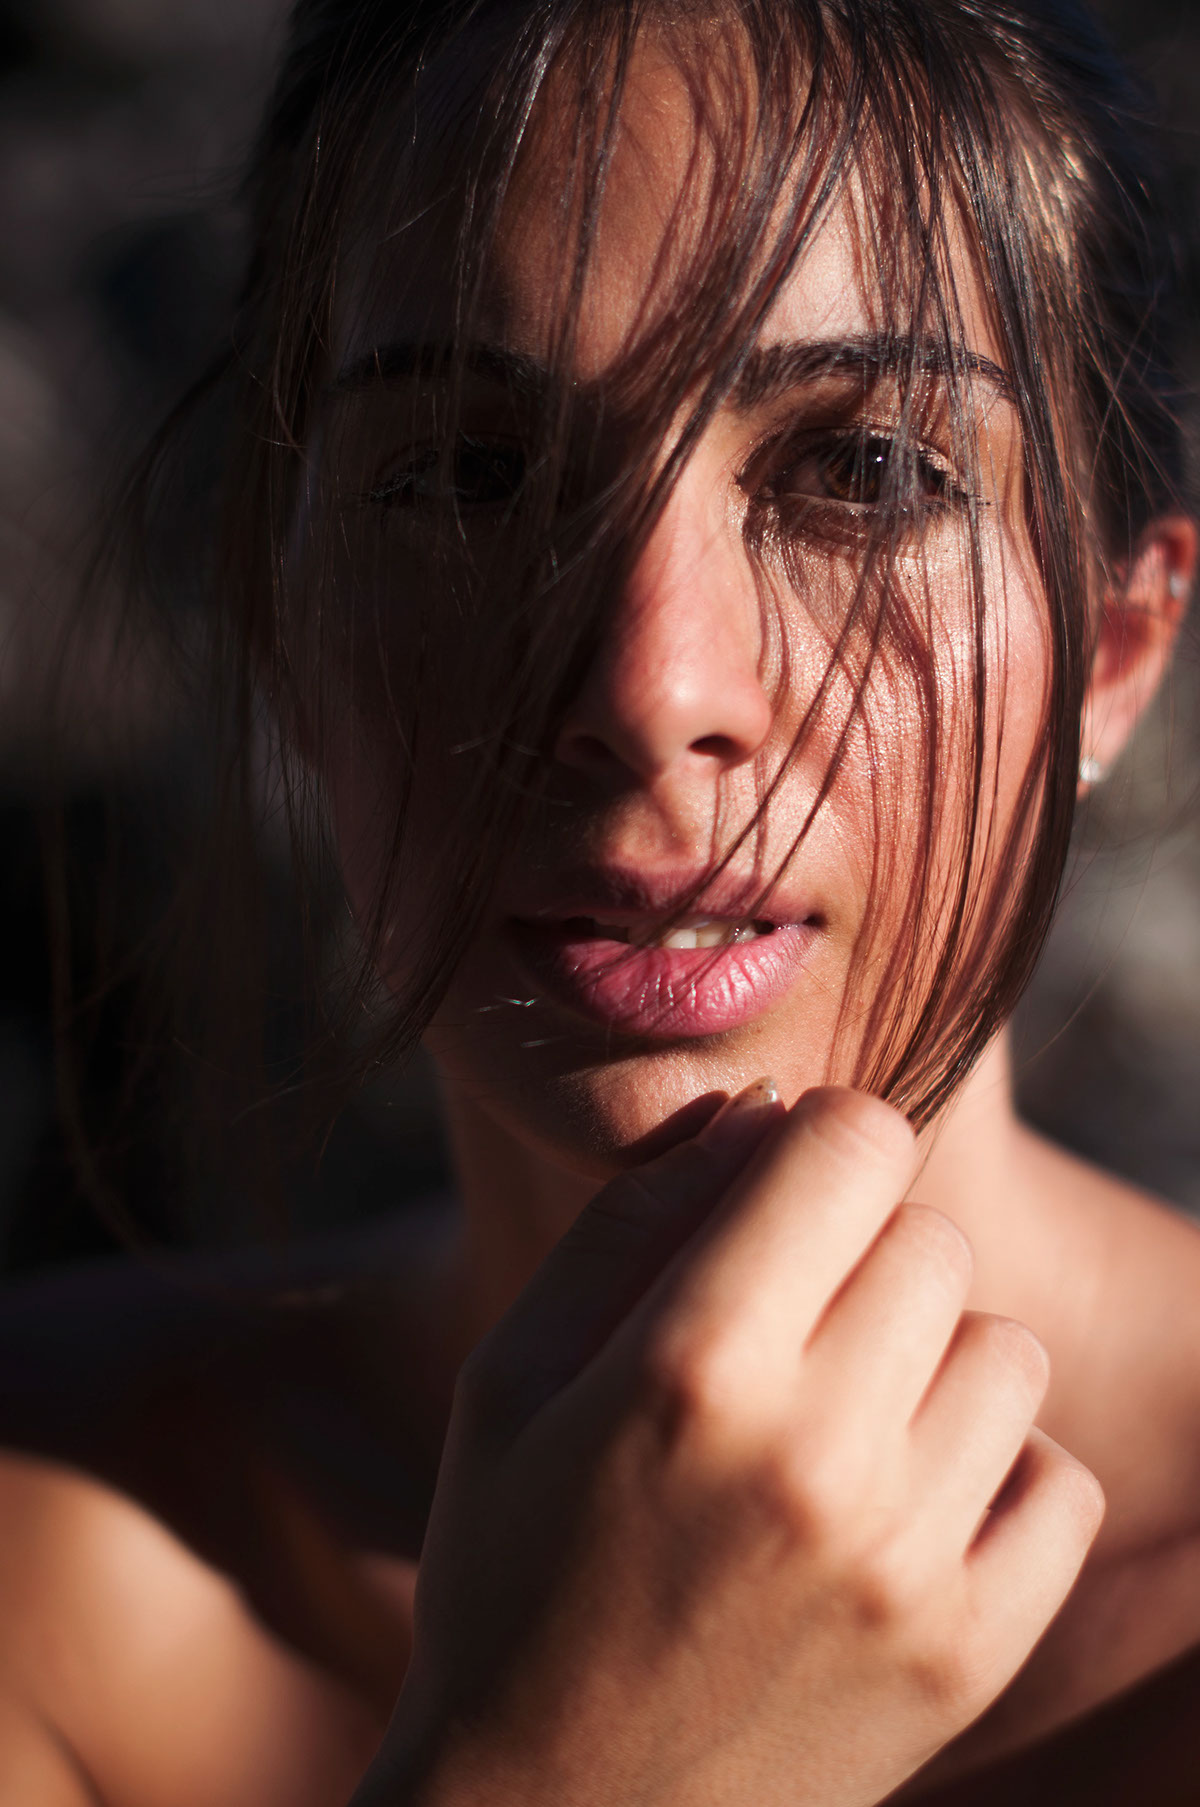 summer beach model portrait sofia hassan Italy body woman Portraiture